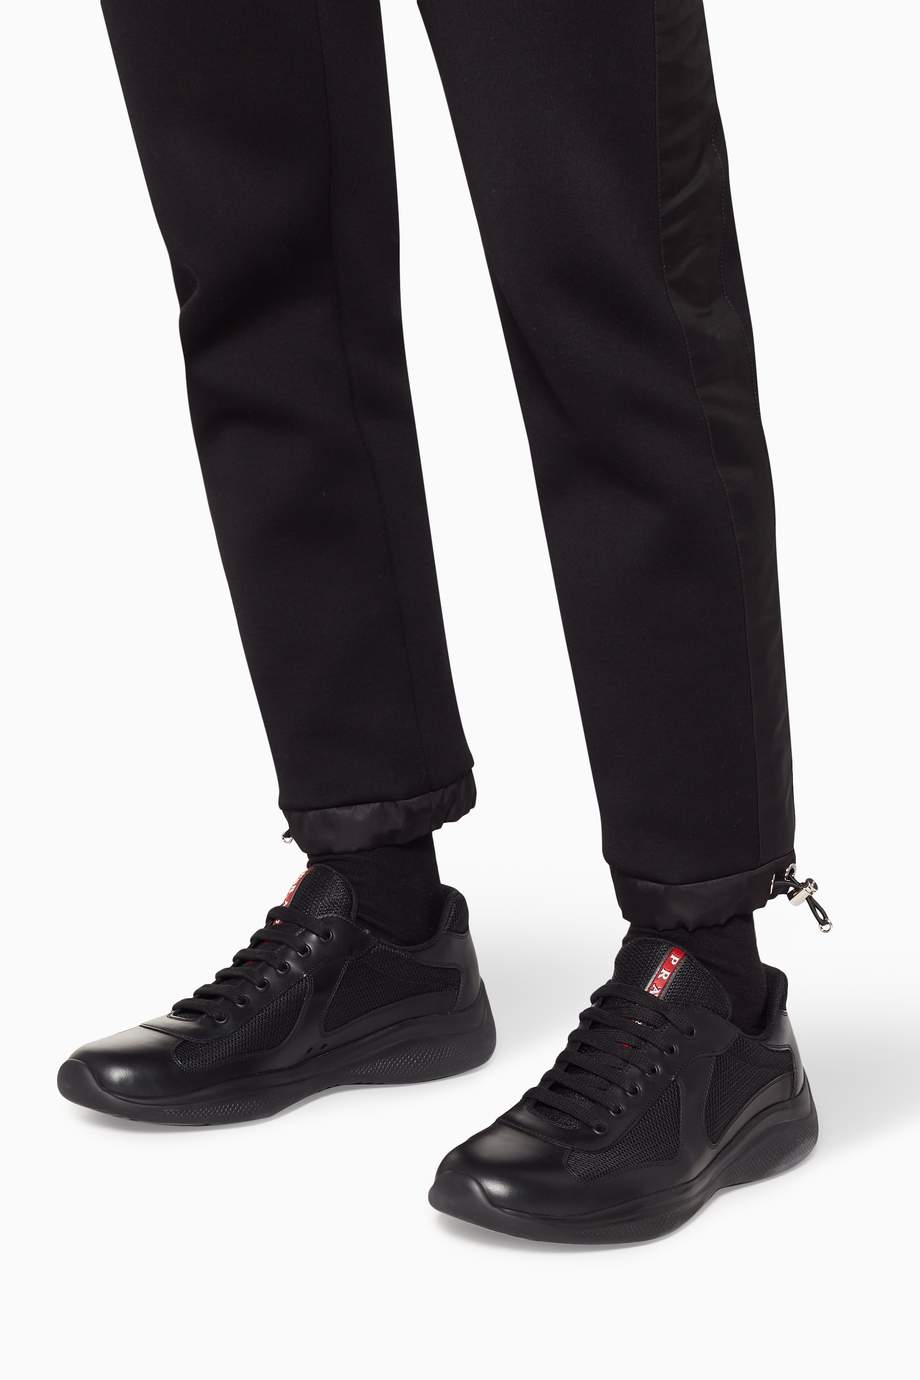 Shop Prada Black Black America's Cup Leather & Knit Sneakers for Men ...